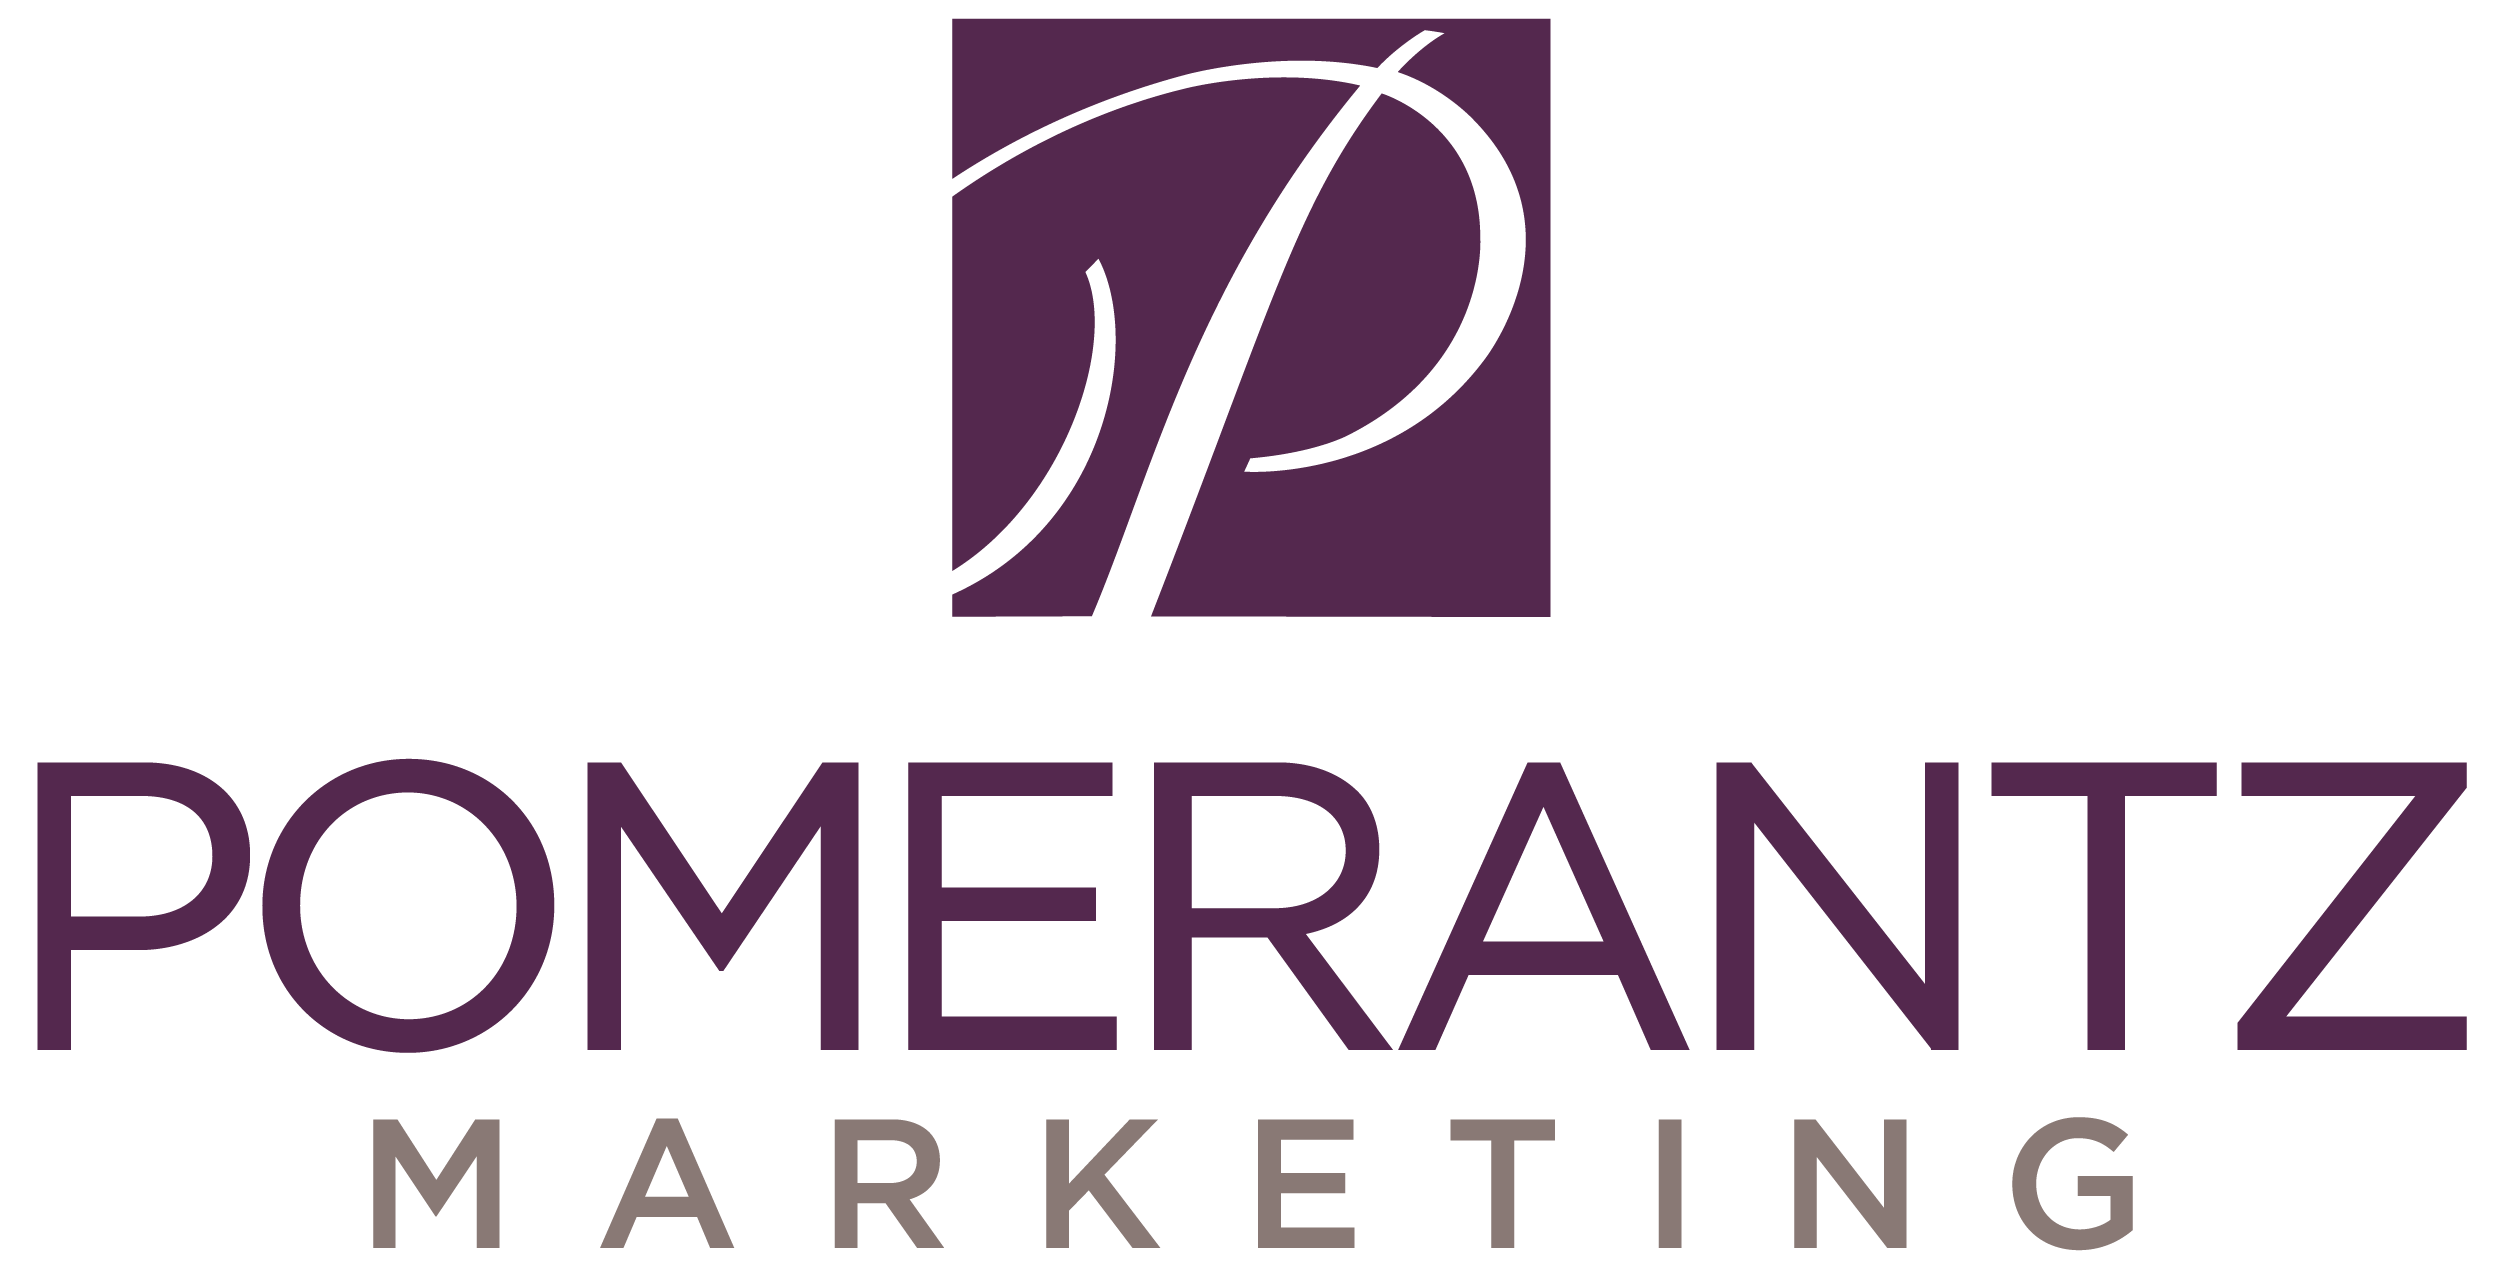 Pomerantz Marketing profile on Qualified.One